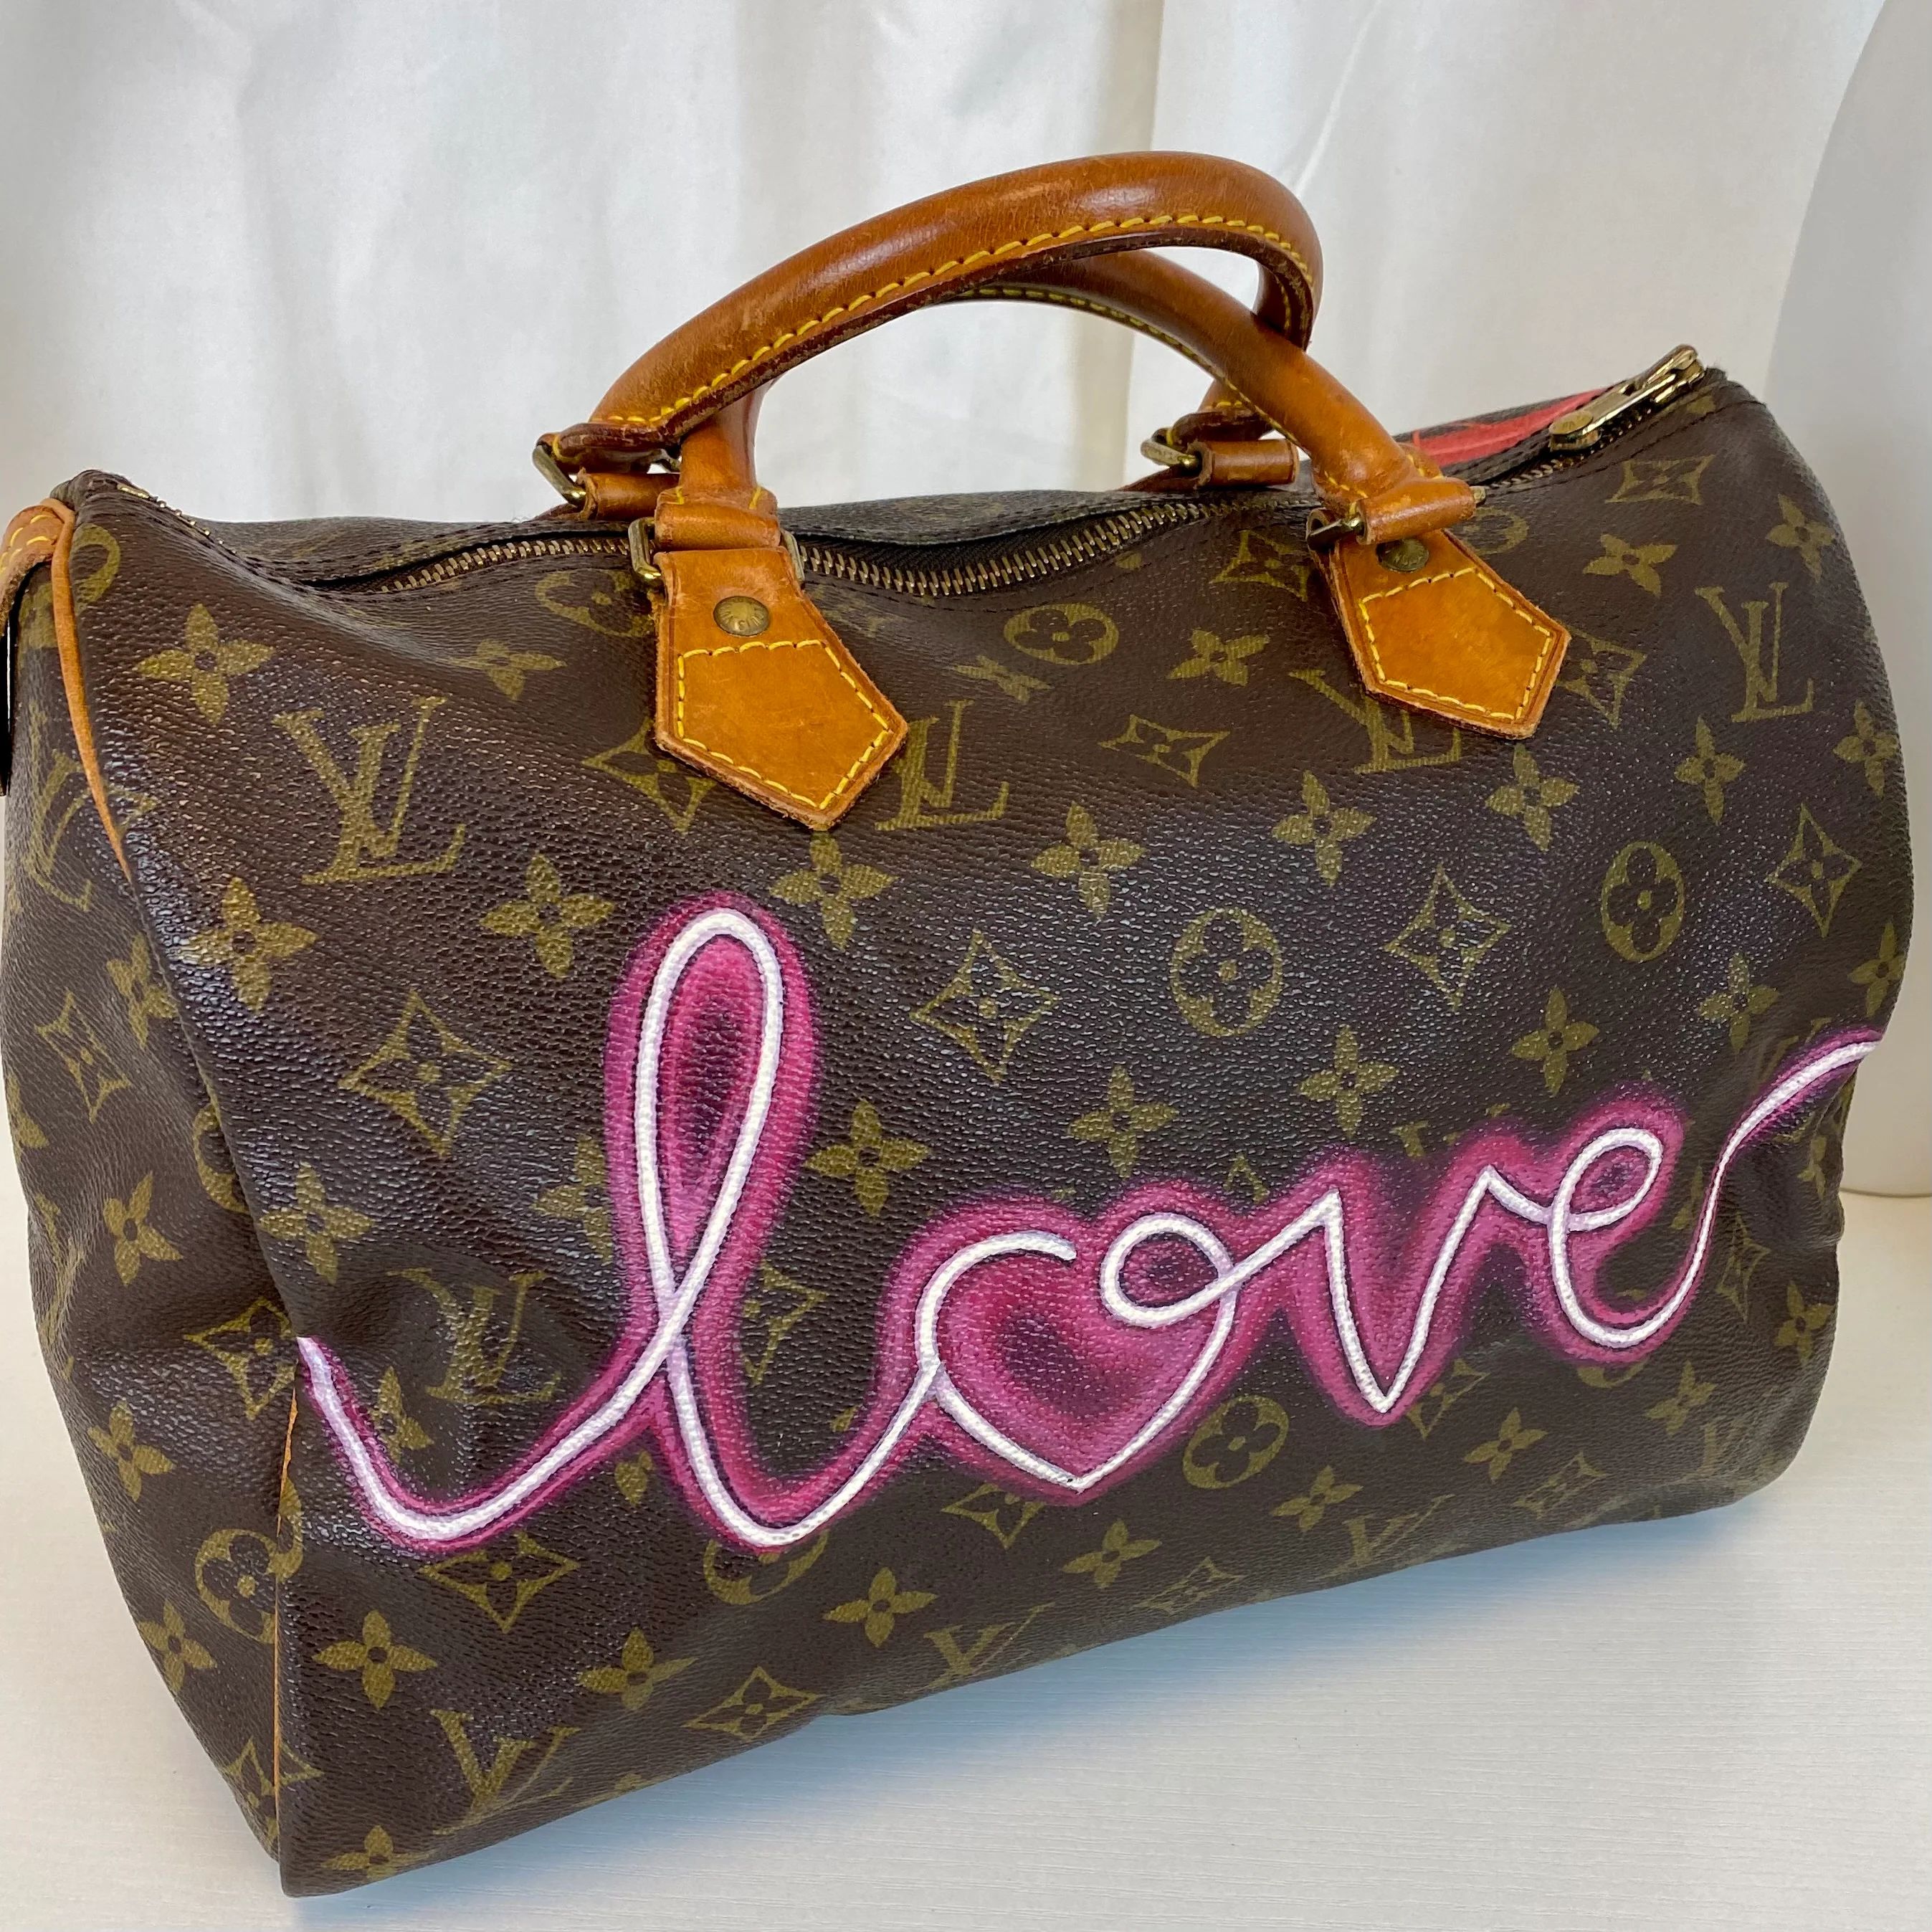 Customized Louis Vuitton Speedy 30 - "Neon Love" Artwork | New Vintage Handbags